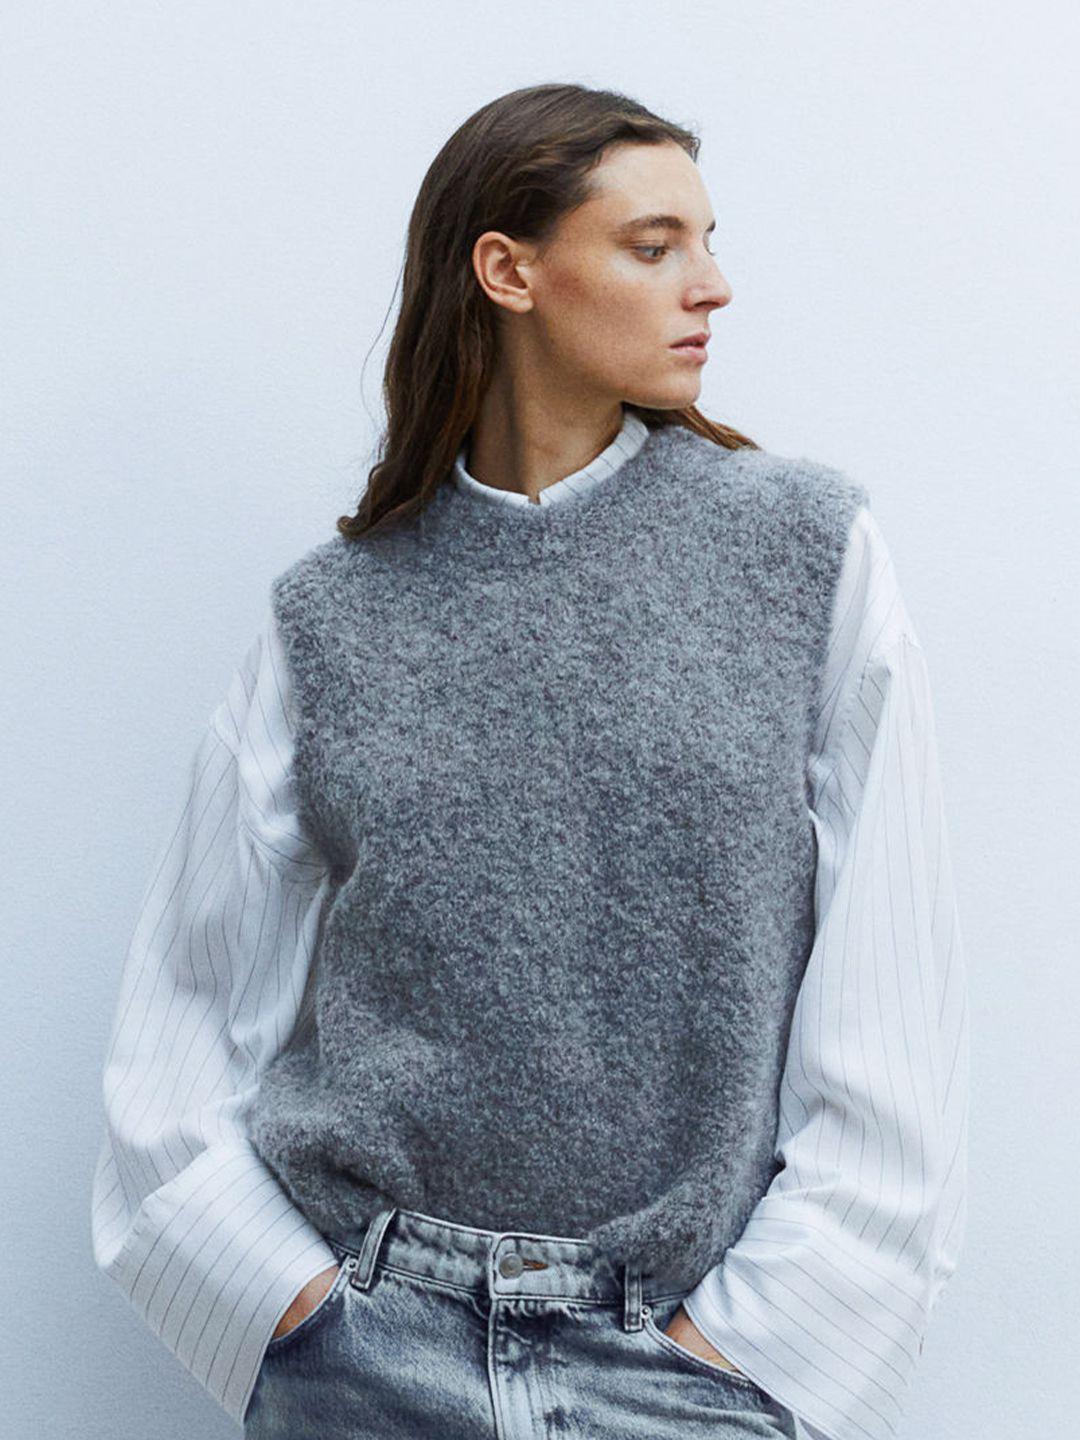 h&m wool-blend sweater vest